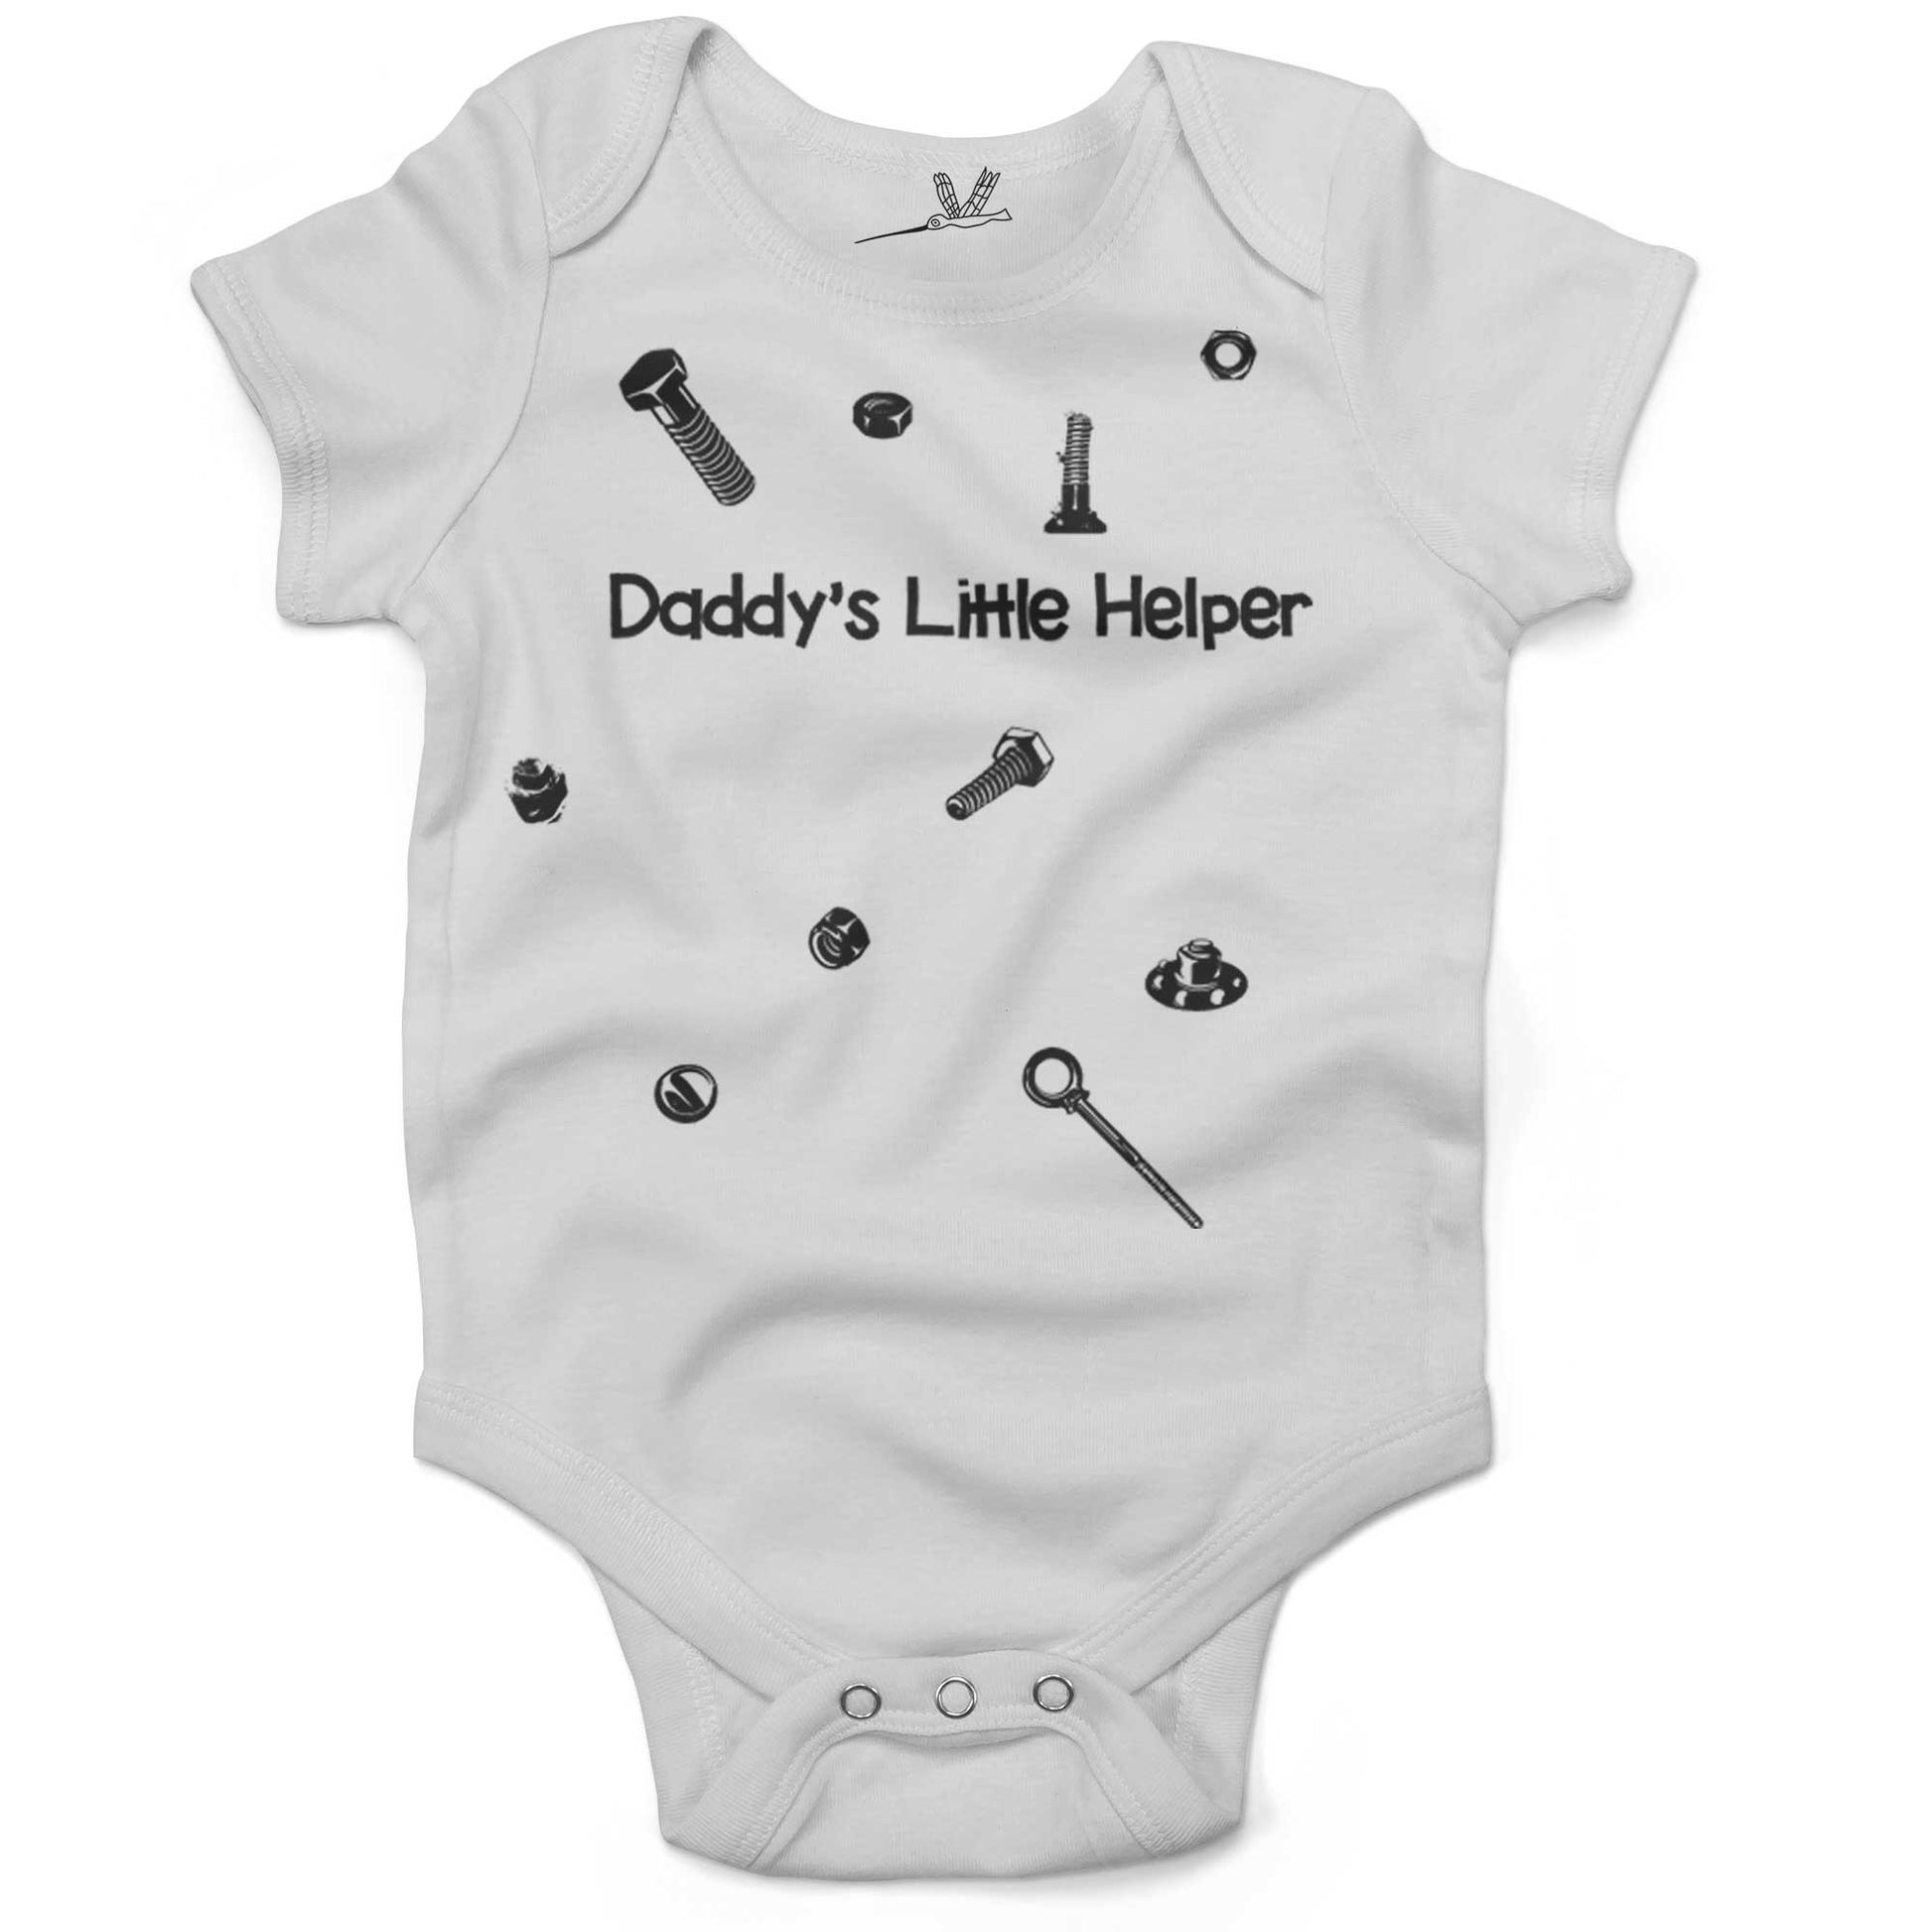 Daddy's Little Helper Infant Bodysuit or Raglan Baby Tee-White-3-6 months